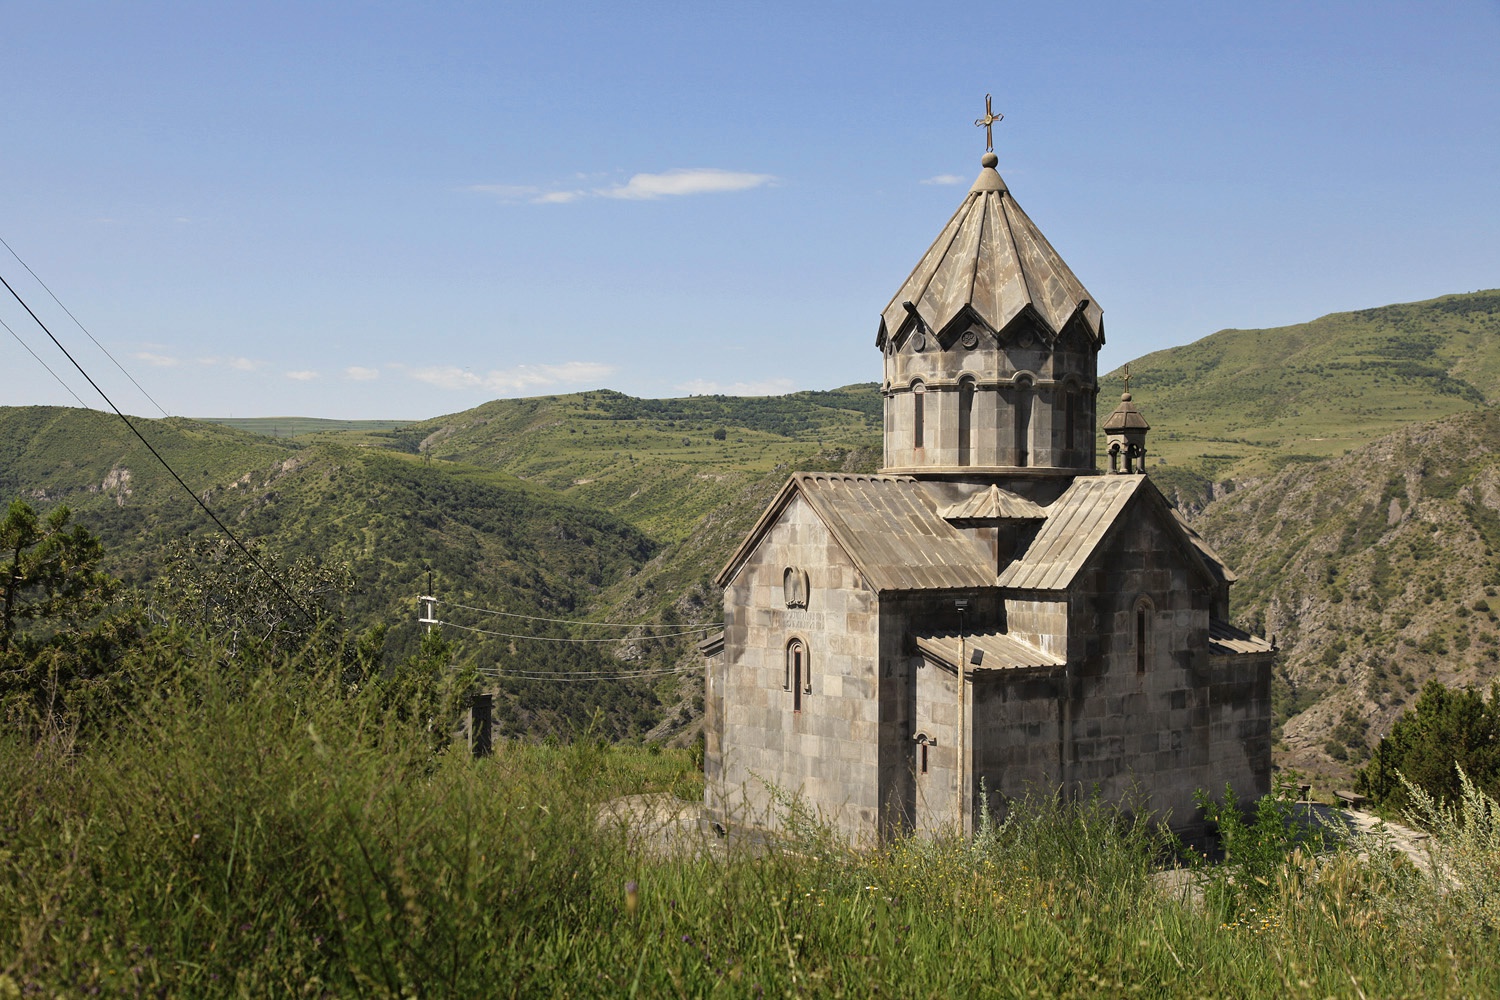 bill-hocker-berdzor-nagorno-karabakh-2013